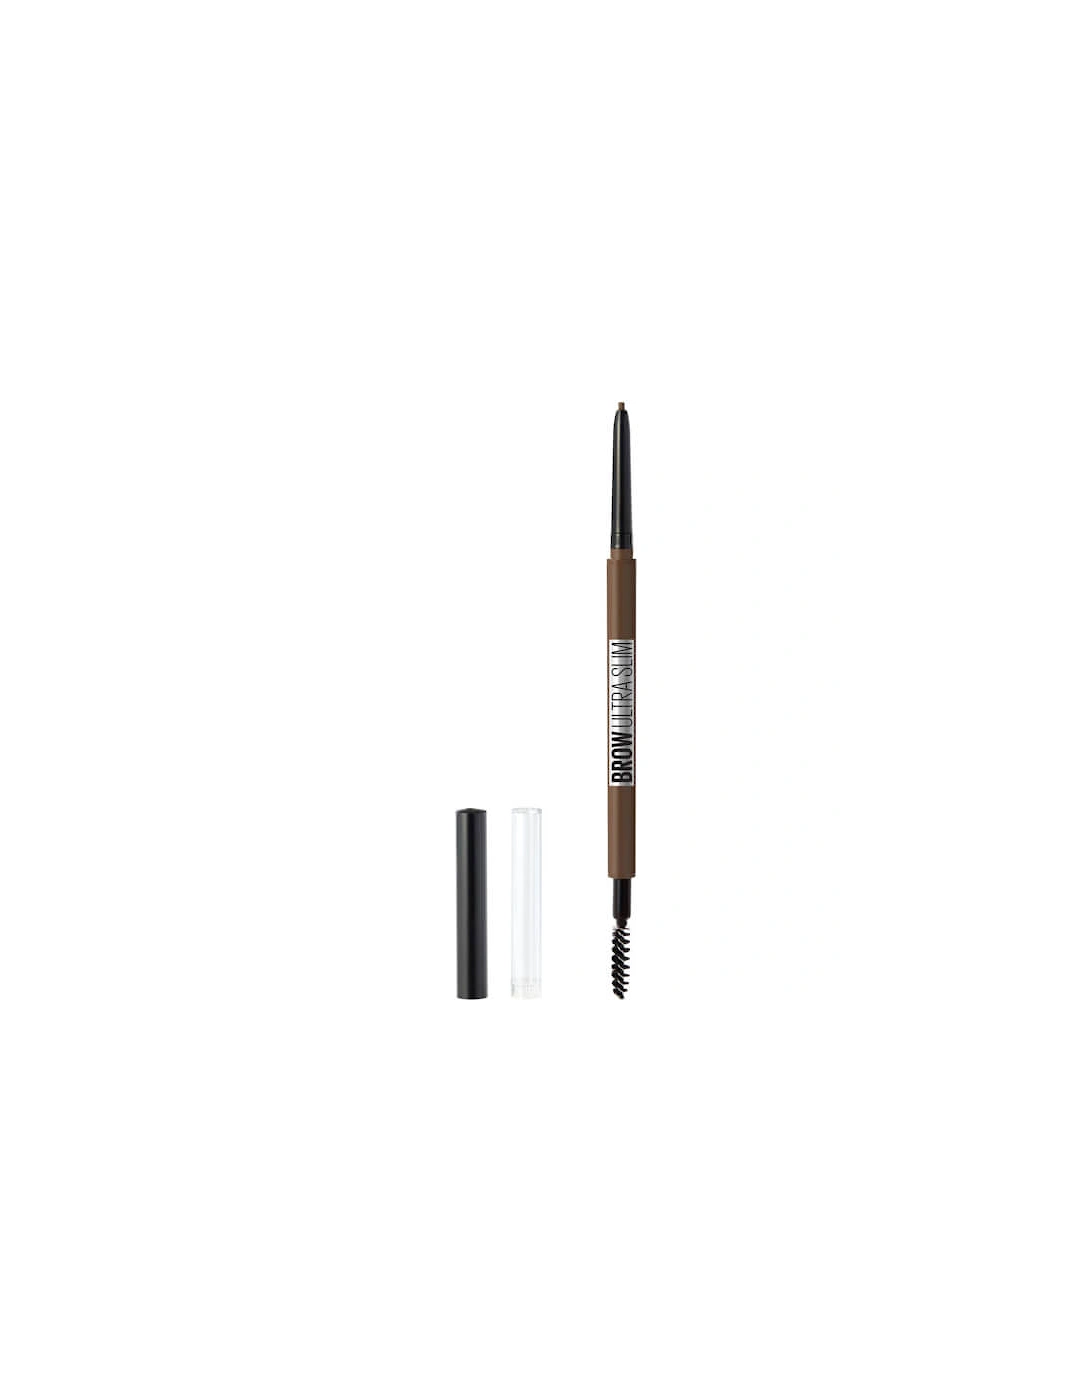 Express Brow Ultra Slim Defining Natural Fuller Looking Brows Eyebrow Pencil - 04 Medium Brown, 2 of 1